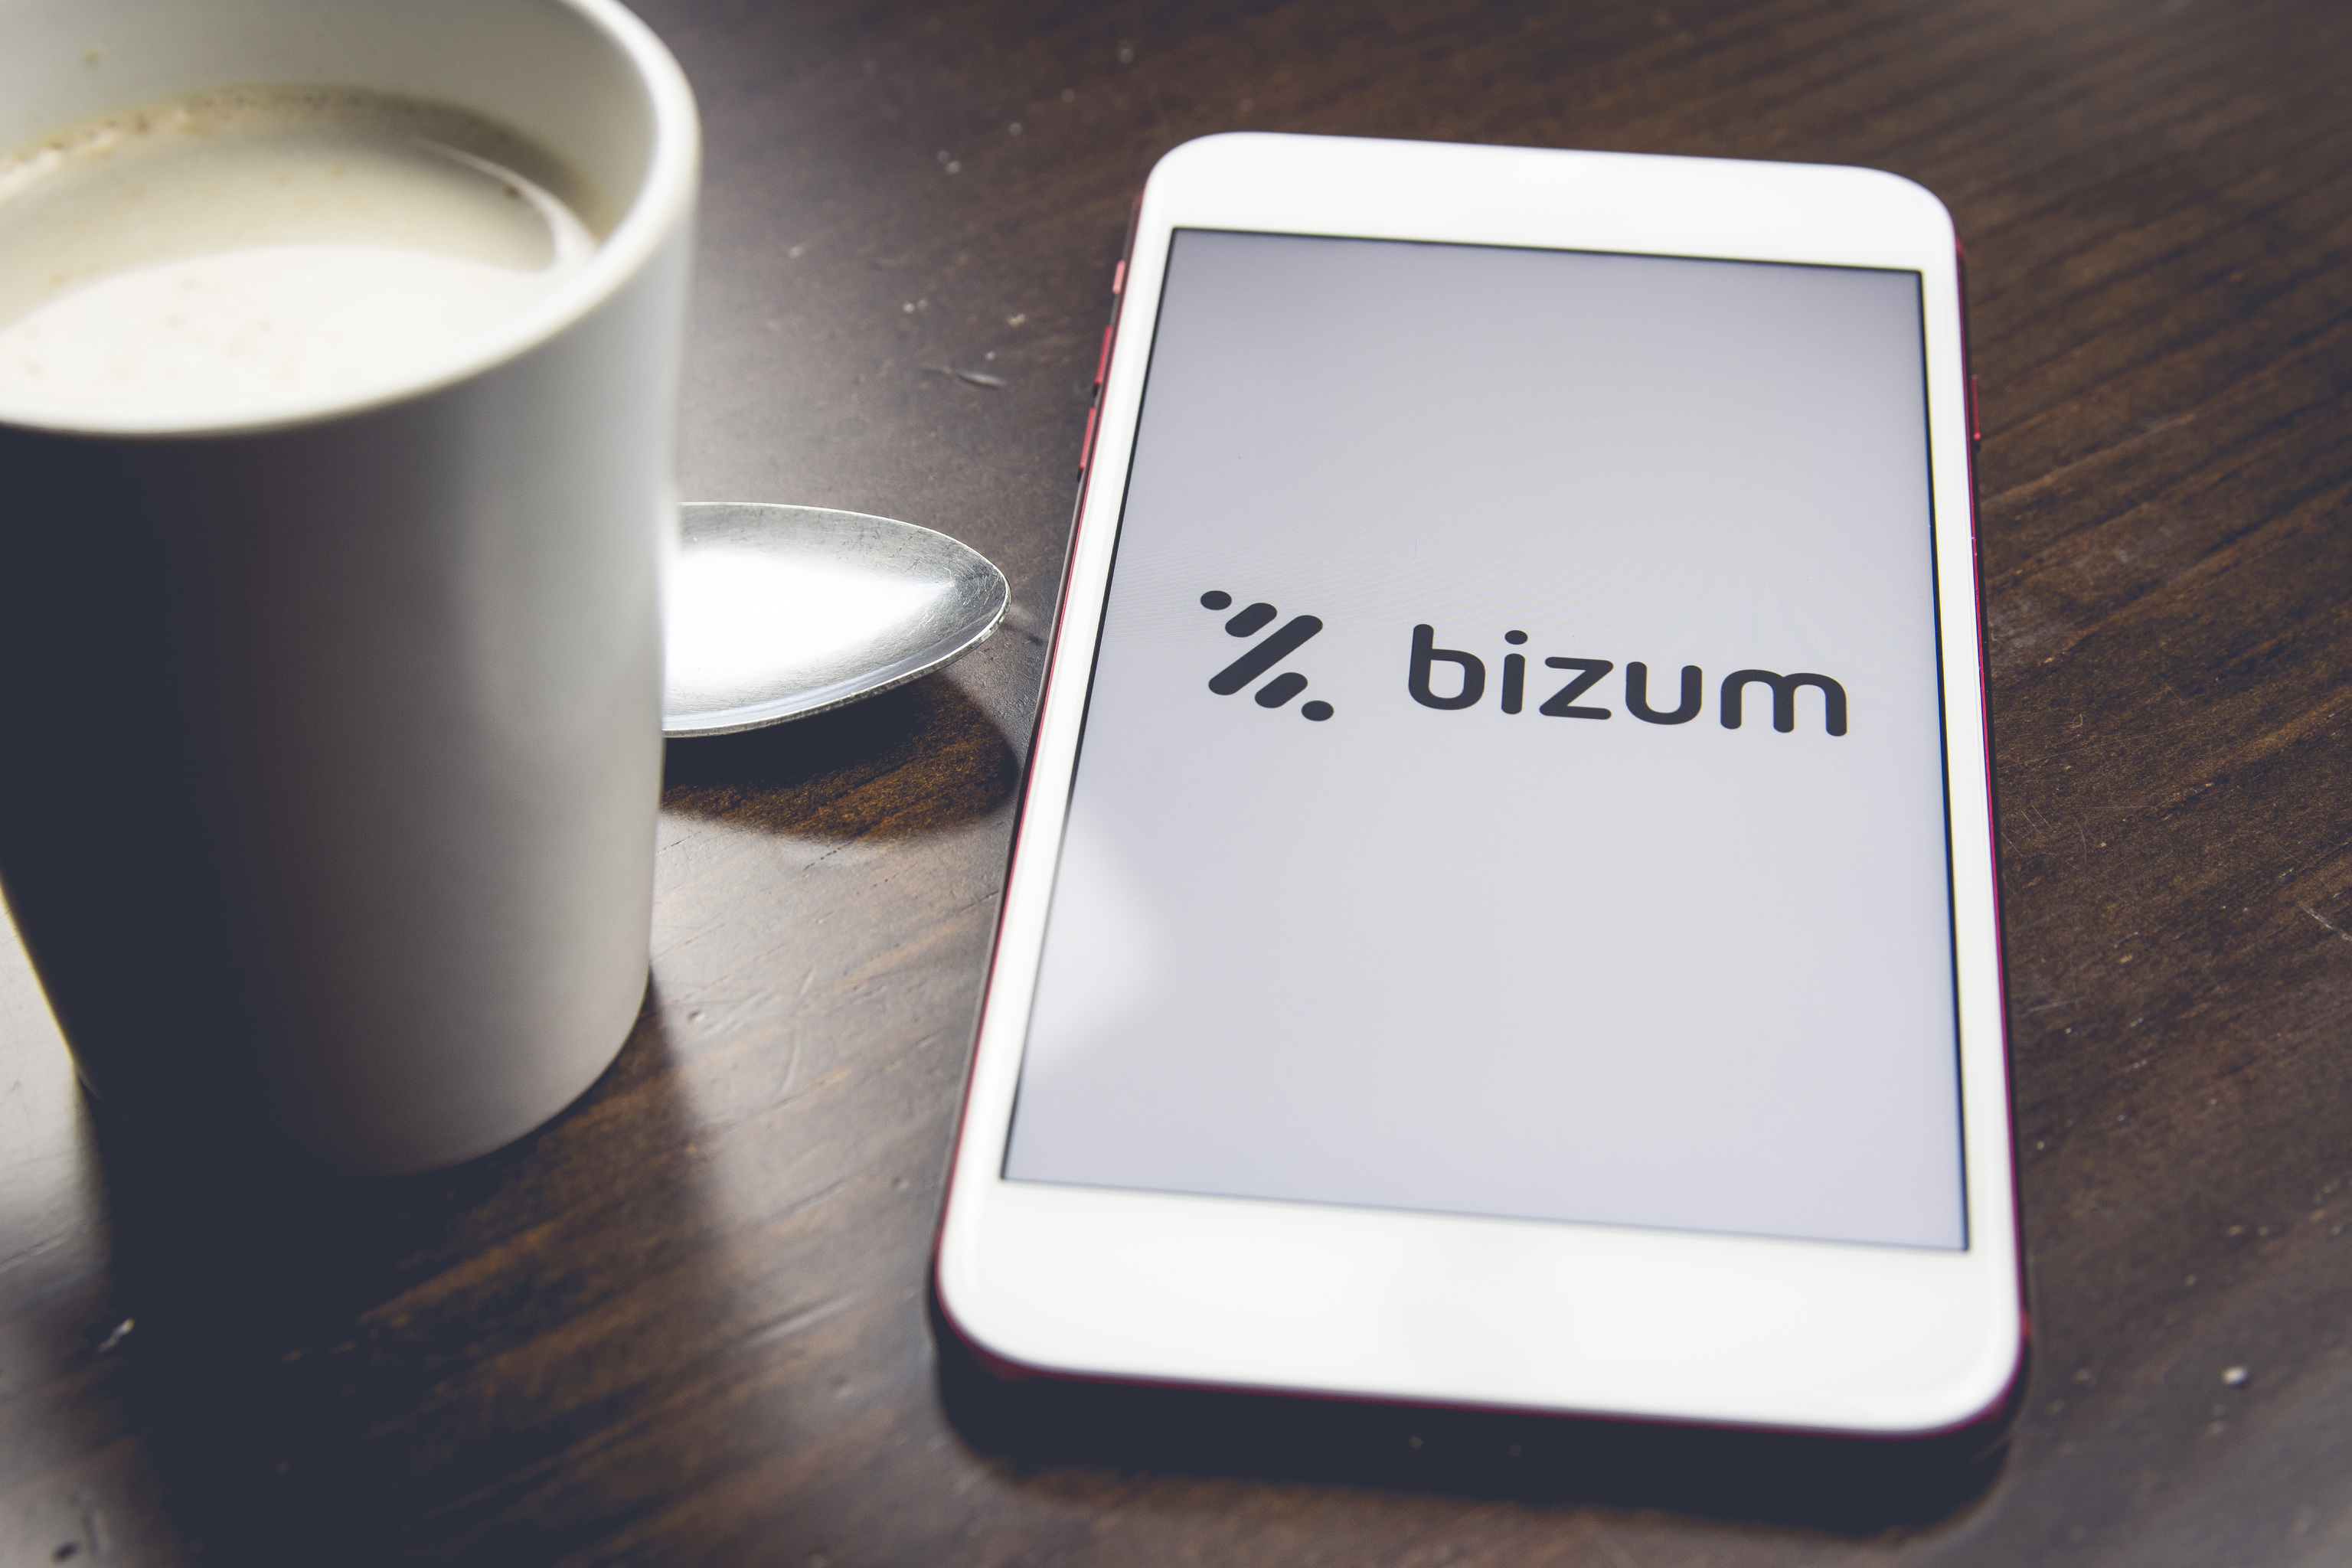 La app Bizum en la pantalla de un terminal mvil.